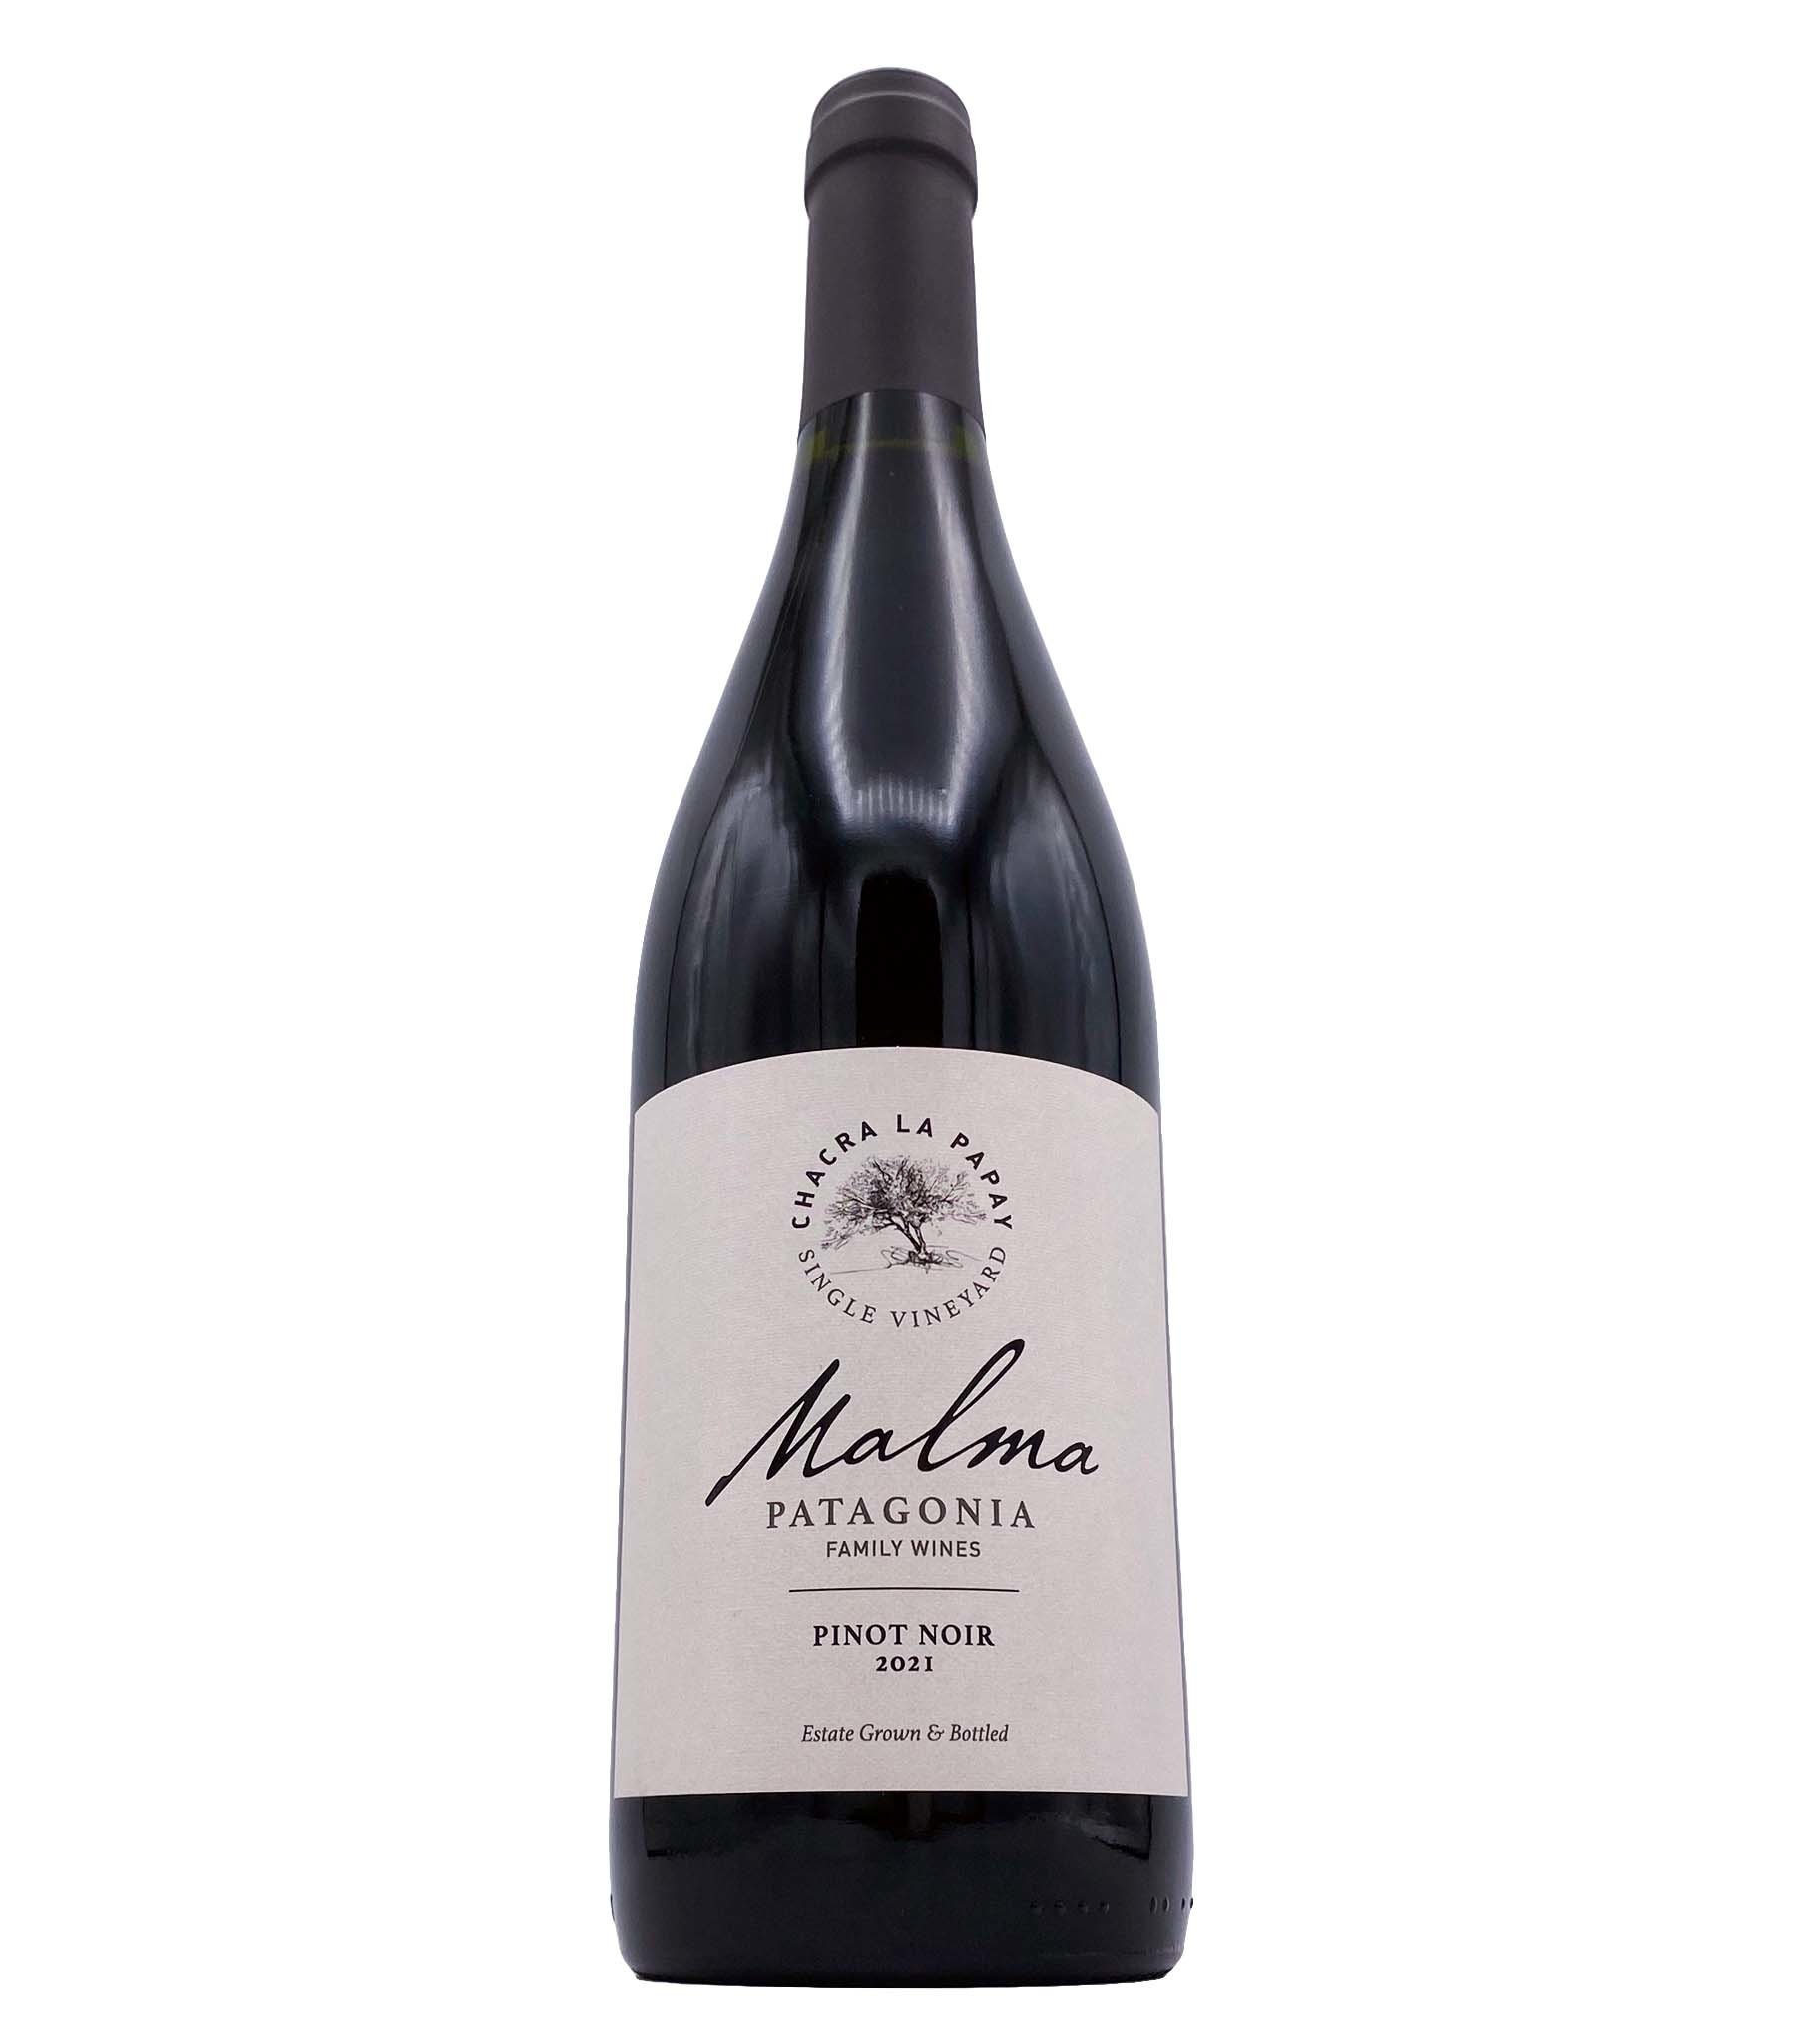 Patagonia Pinot Noir 2021 Bodega Malma